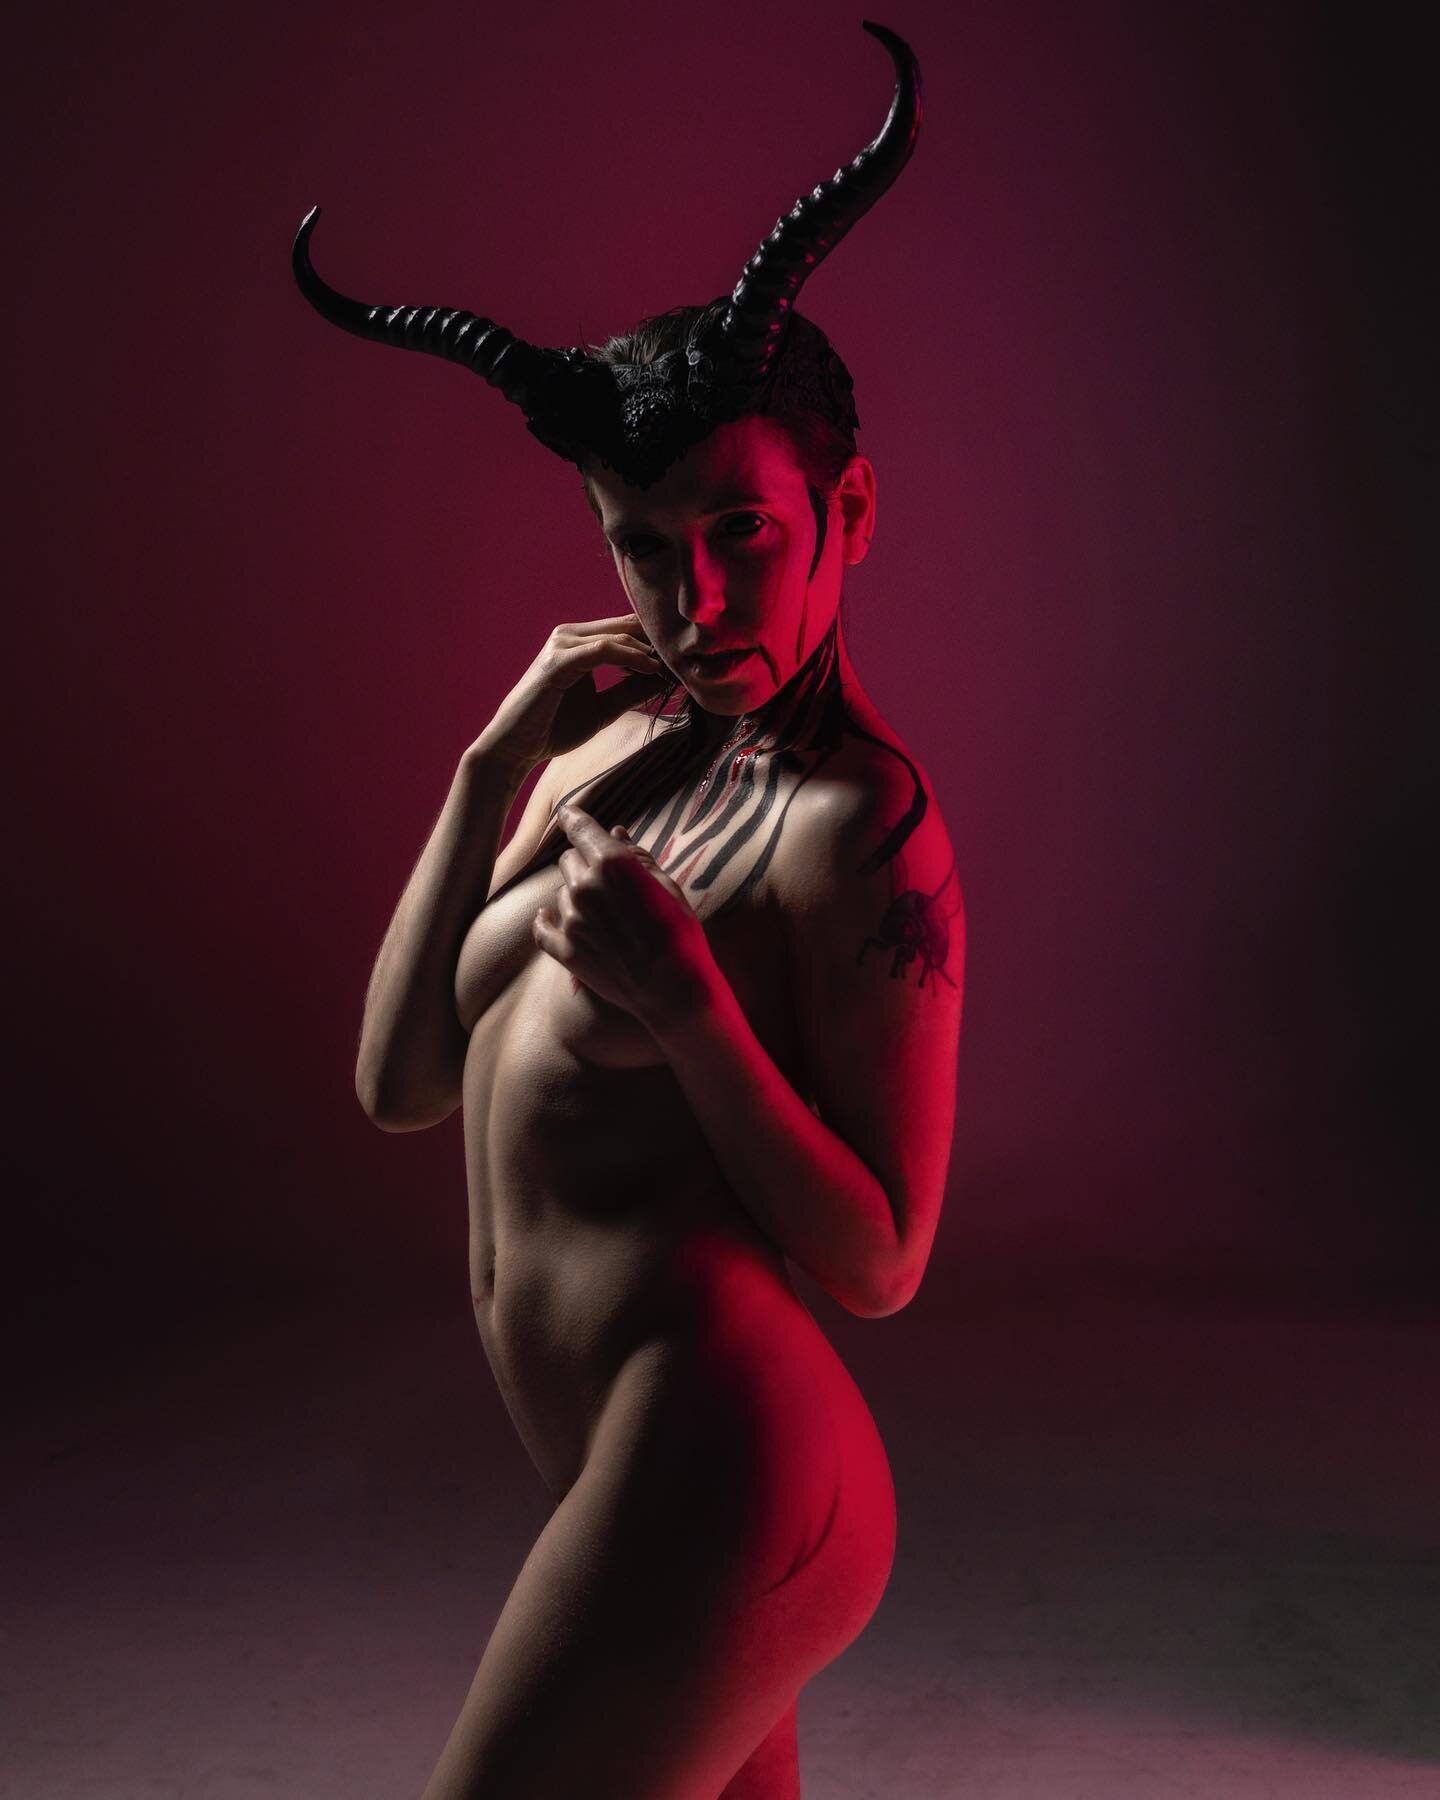 Diabla (pt. 2)
@melancholic_model 

#cosplay #demon #devil #dmvphotographer #implied #bodypaint #horns #scleralenses @moco_queen